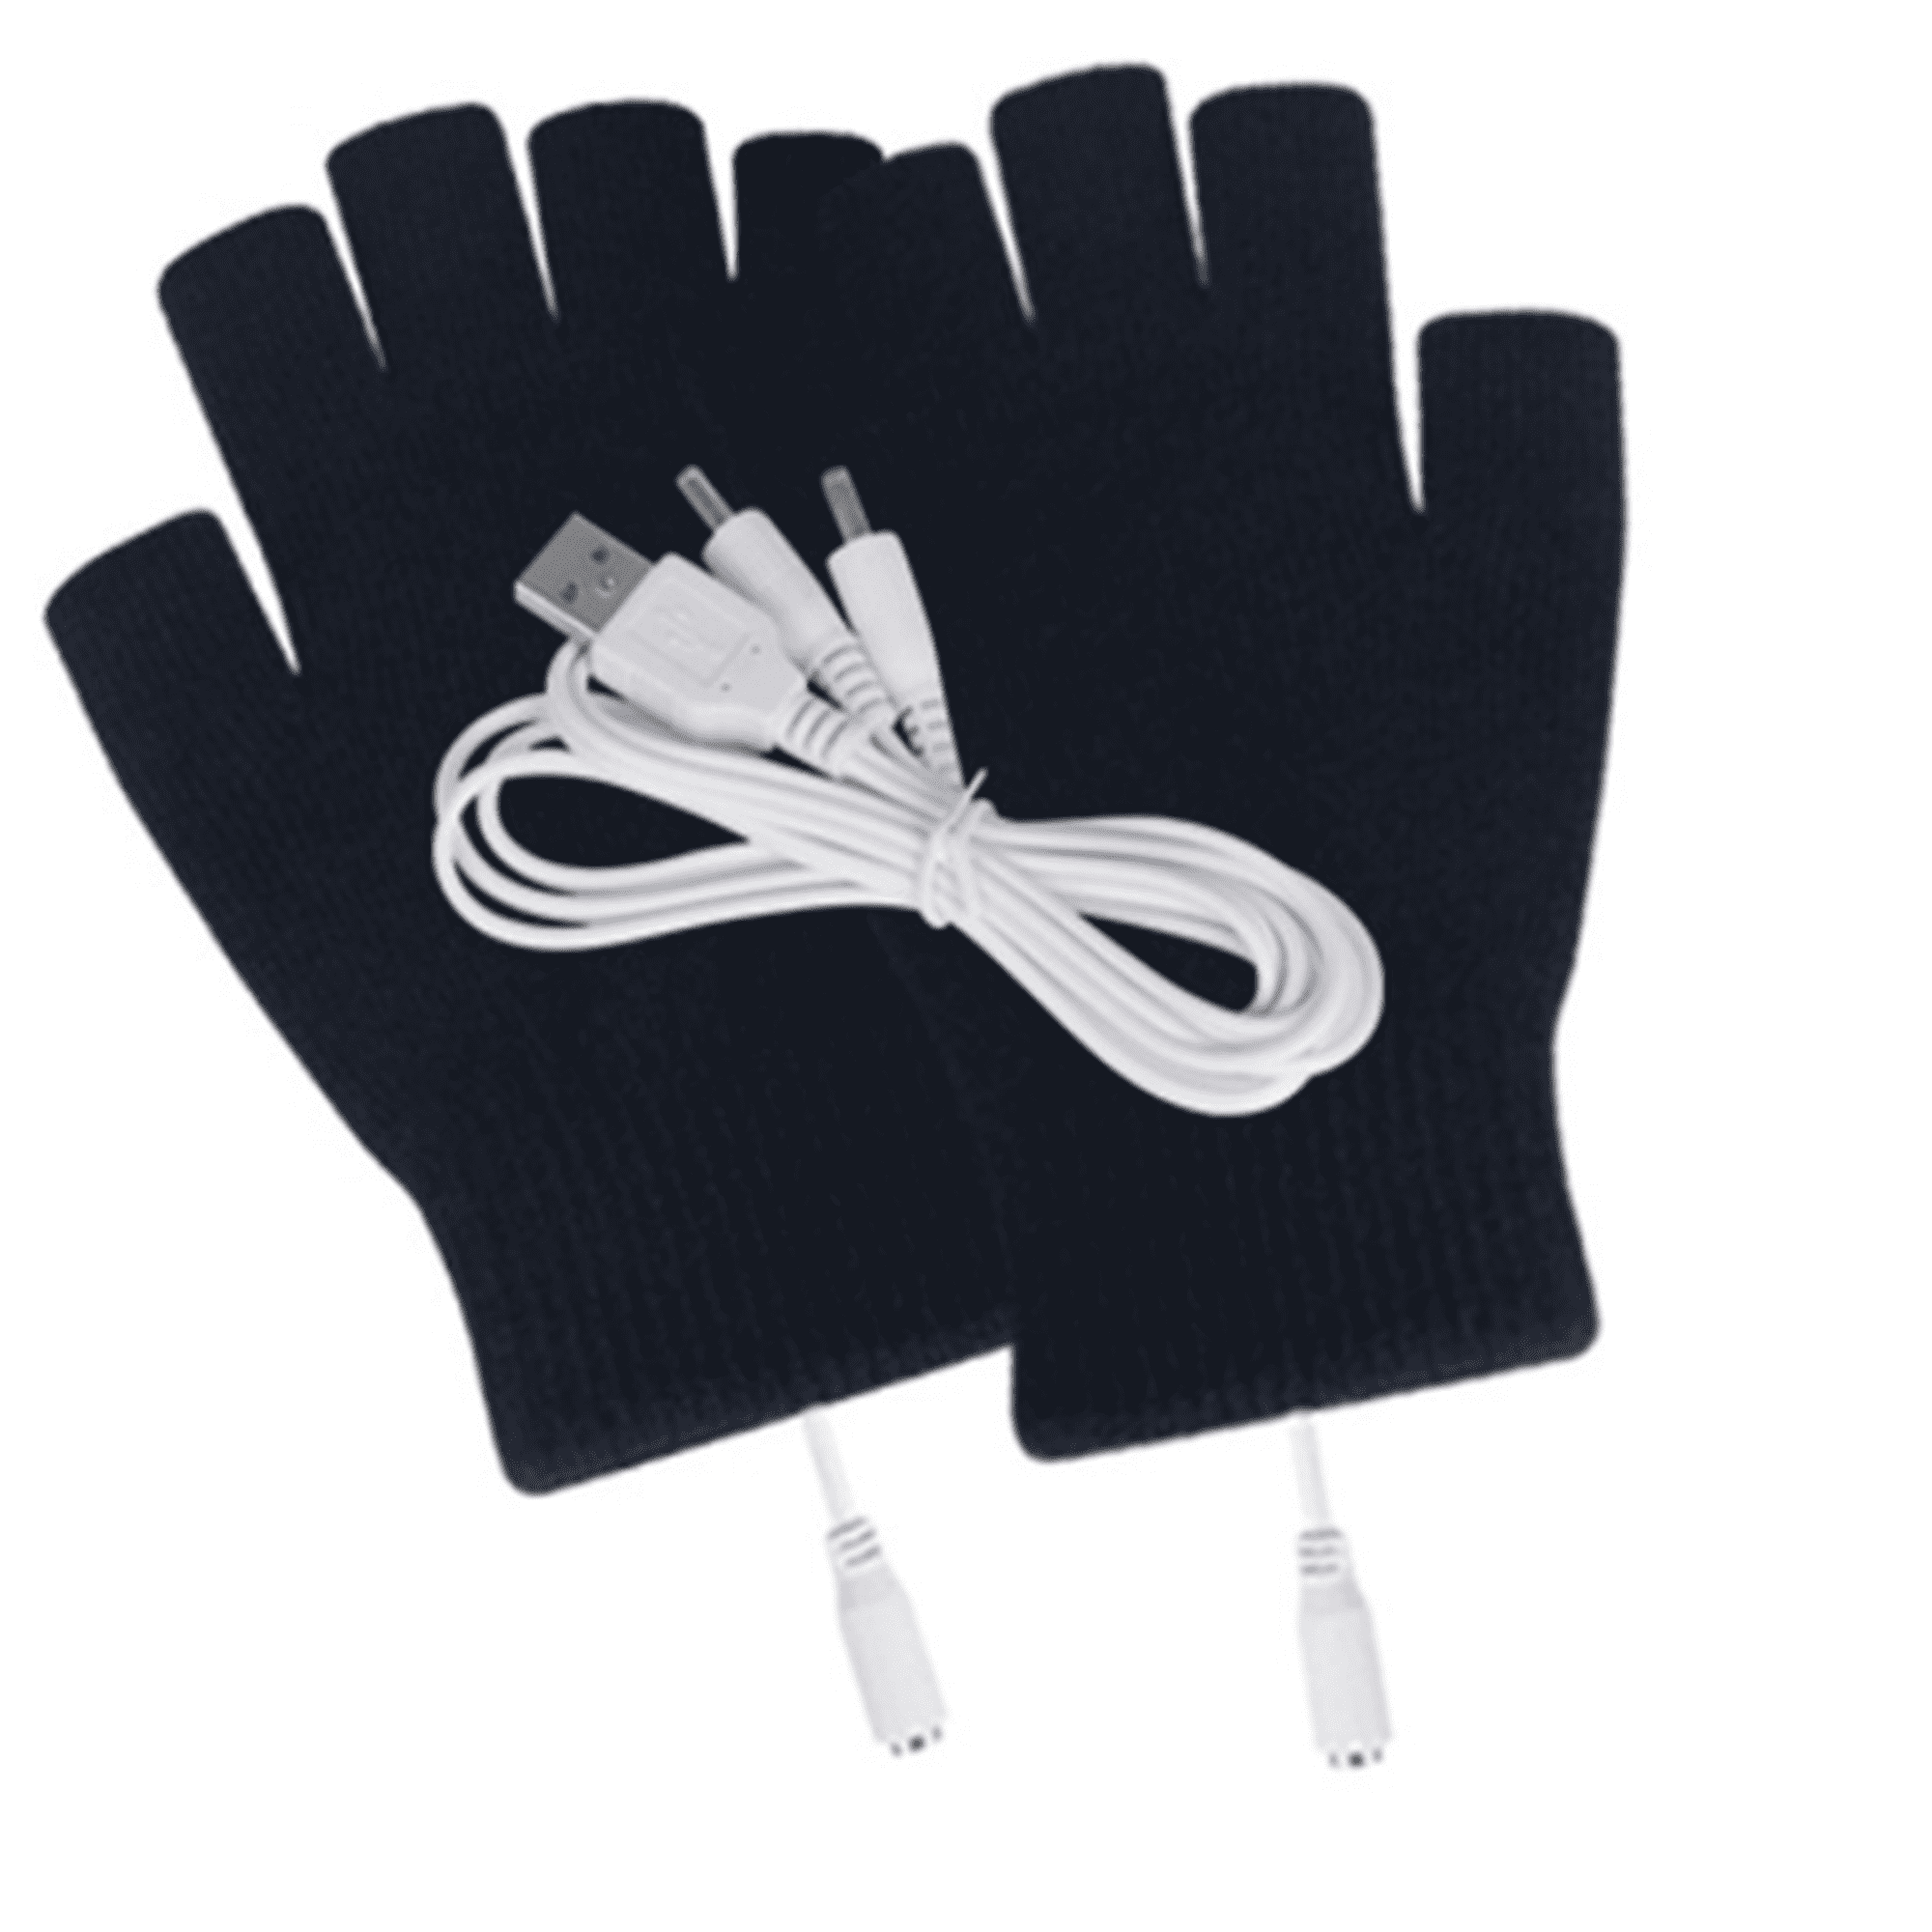 USB Powered Heating Heated Winter Hand Warmer Gloves Washable 